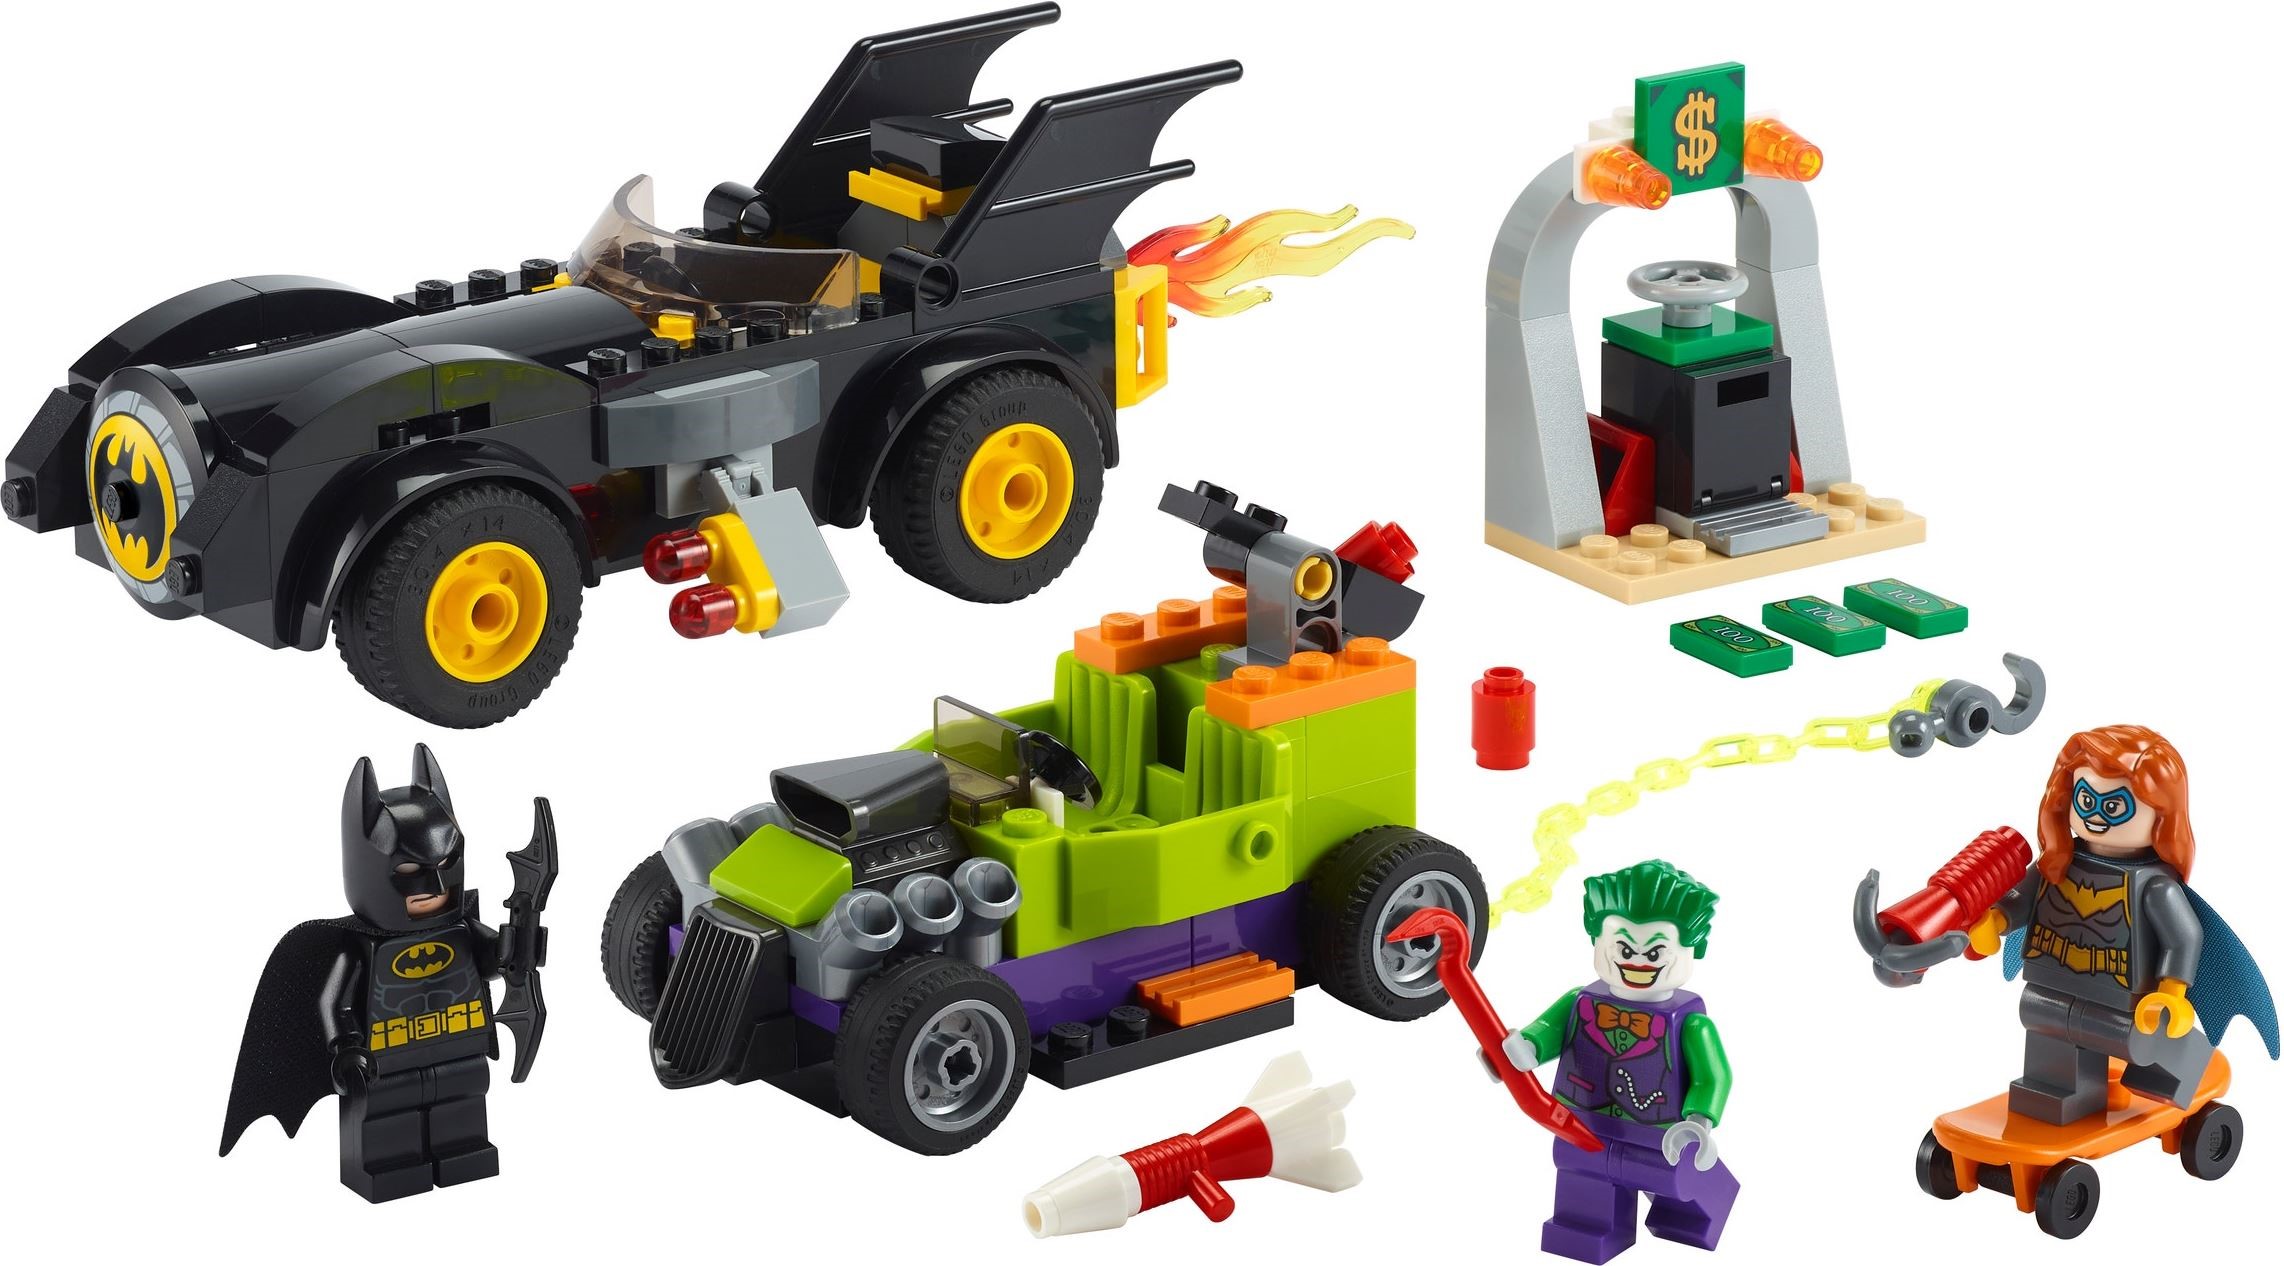 LEGO Super Heroes - Batman™ mod Jokeren: Batmobile™-jagt (76180)